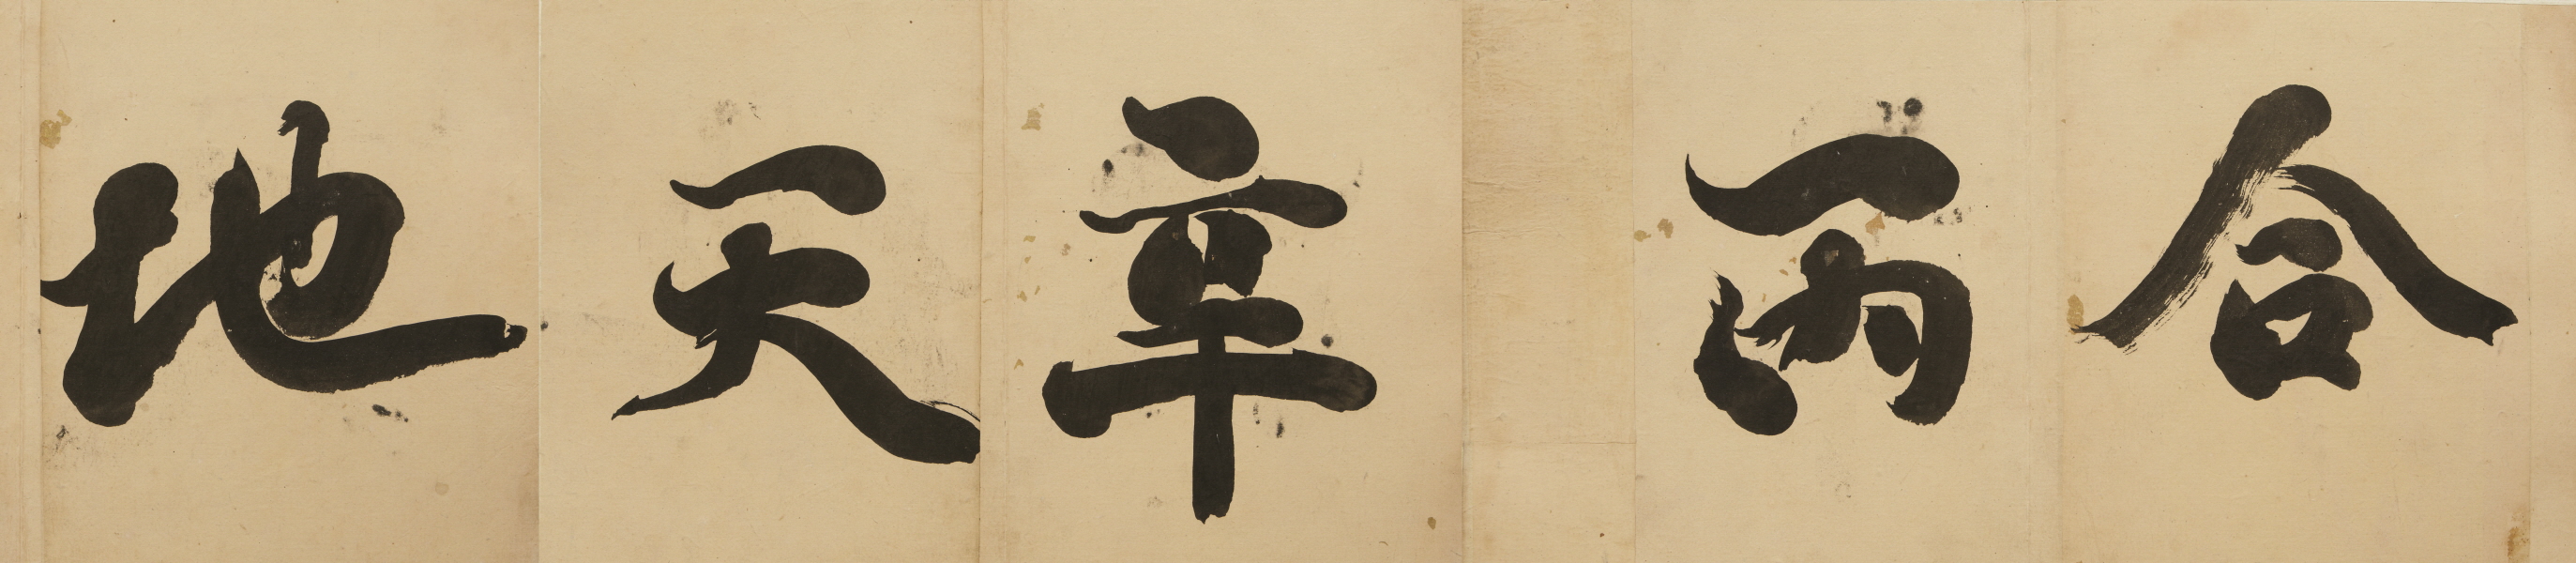 Chusa (秋史) Kim Jeong-hui (金正喜, 1786~1856), Hapbyungshinchunjee 合丙辛天地, mid 19th century, ink on paper 紙本墨書, each 34x26cm ⓒHakgojae Gallery